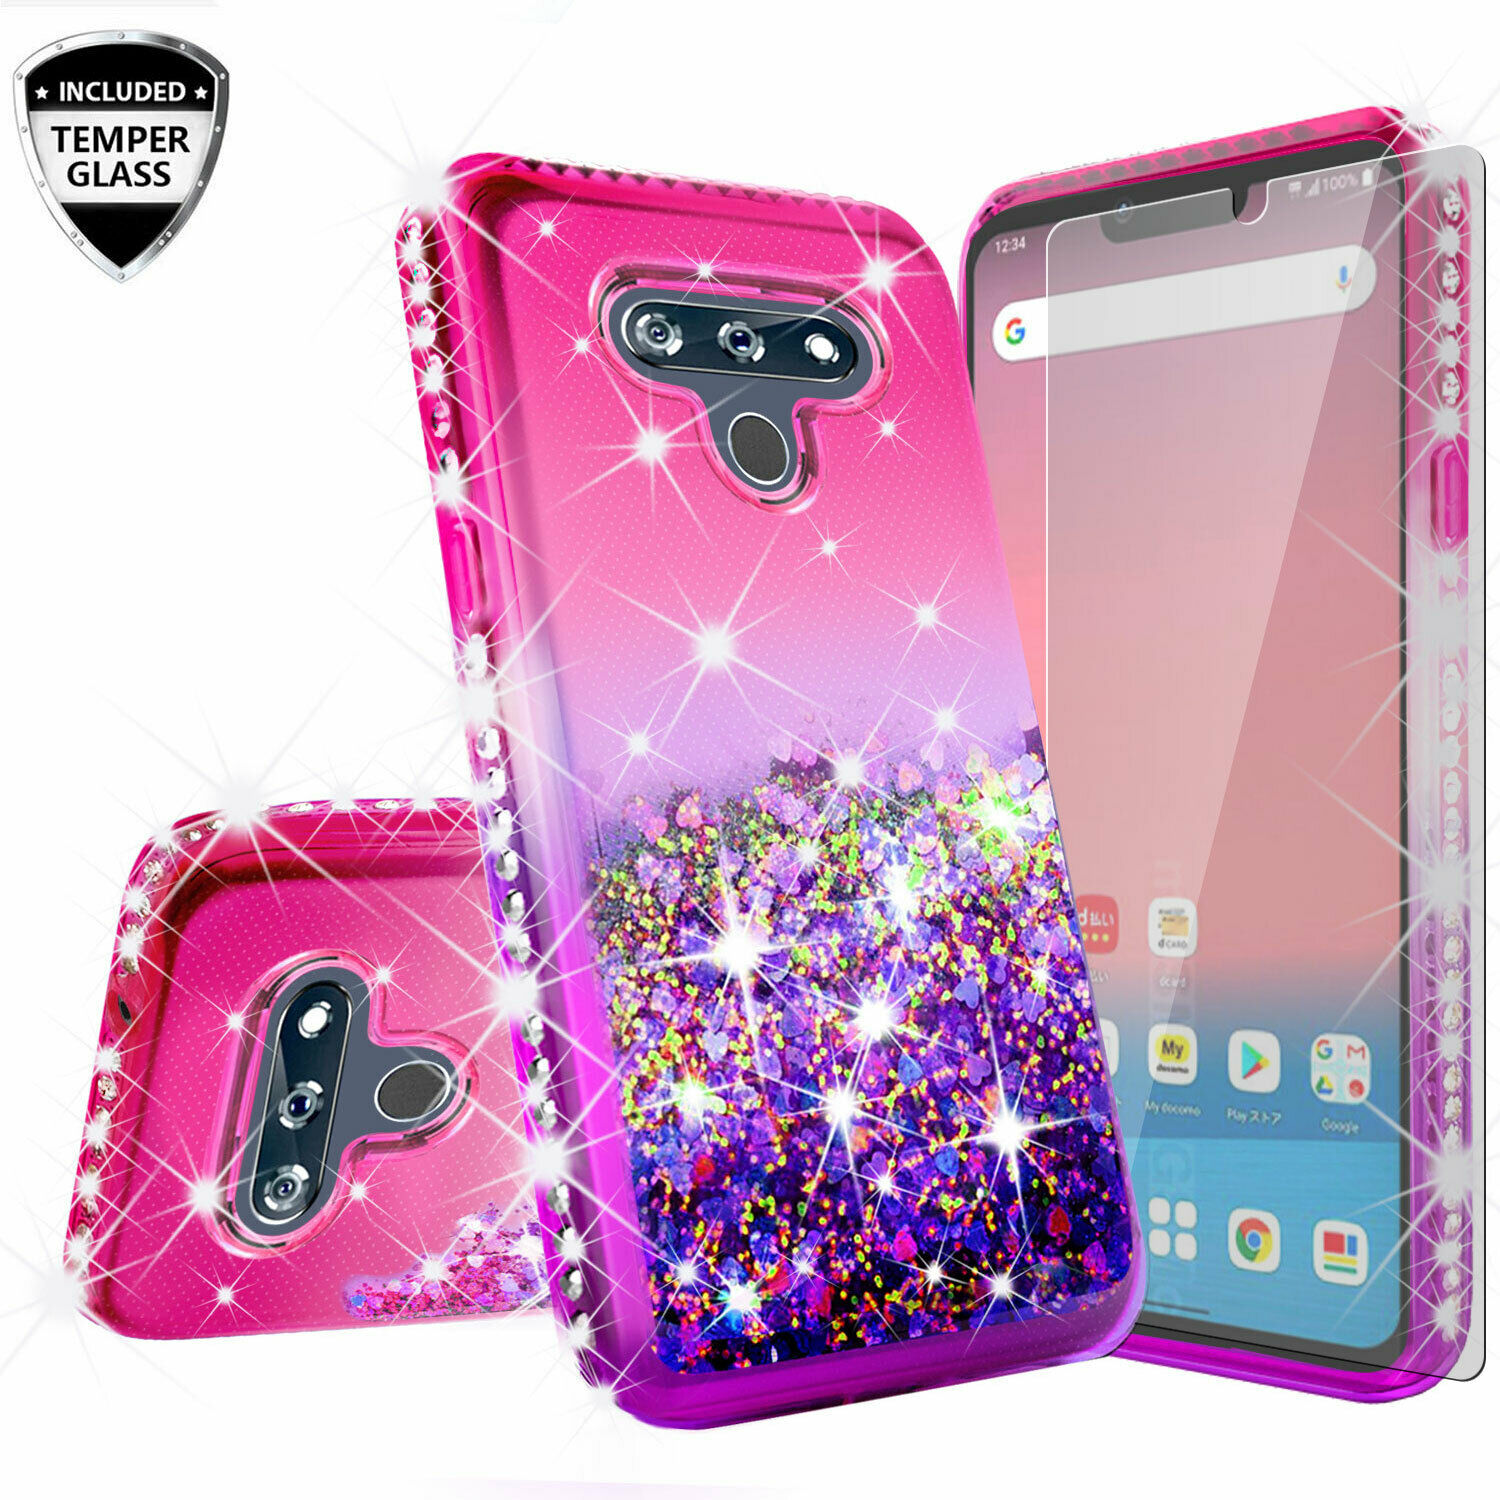 LG LG Harmony 4, Premier Pro Plus L455DL Case w[Temper Glass] Cute Liquid Glitter Bling Diamond Bumper Girls Women Phone Case for LG LG Harmony 4, Premier Pro Plus L455DL - Pink/Purple - image 1 of 5